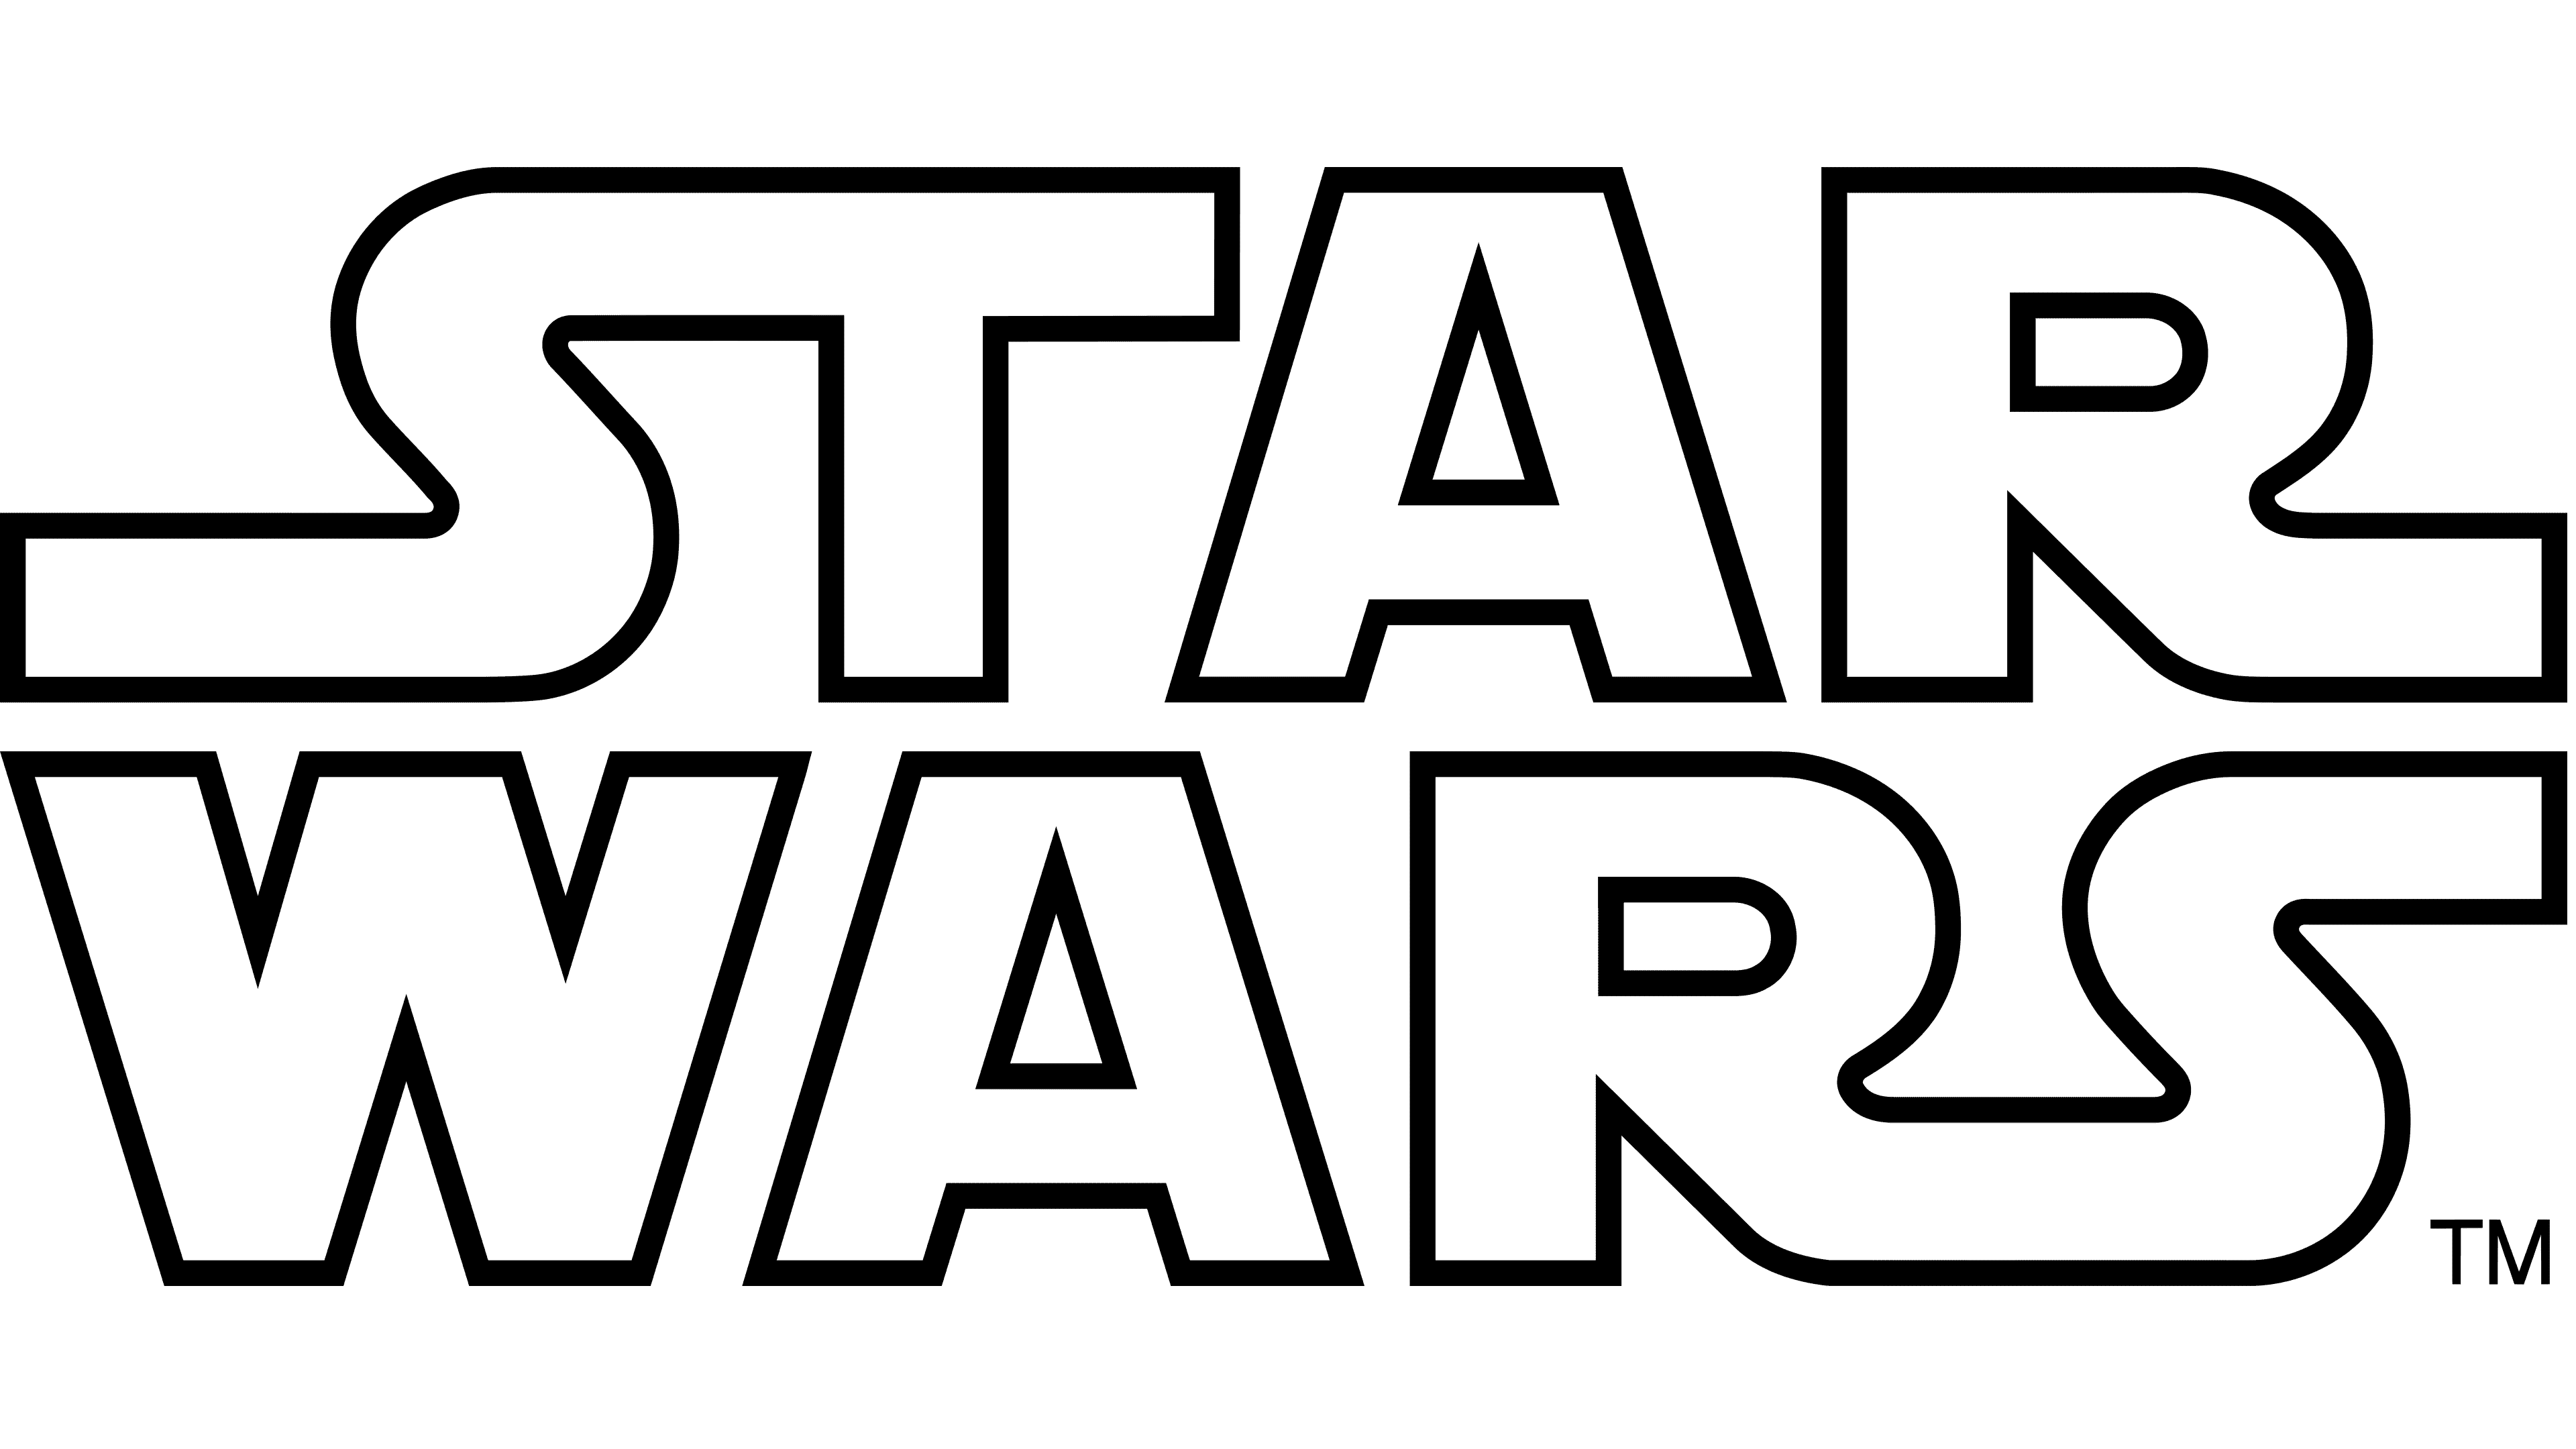 beamng drive logo star wars logo